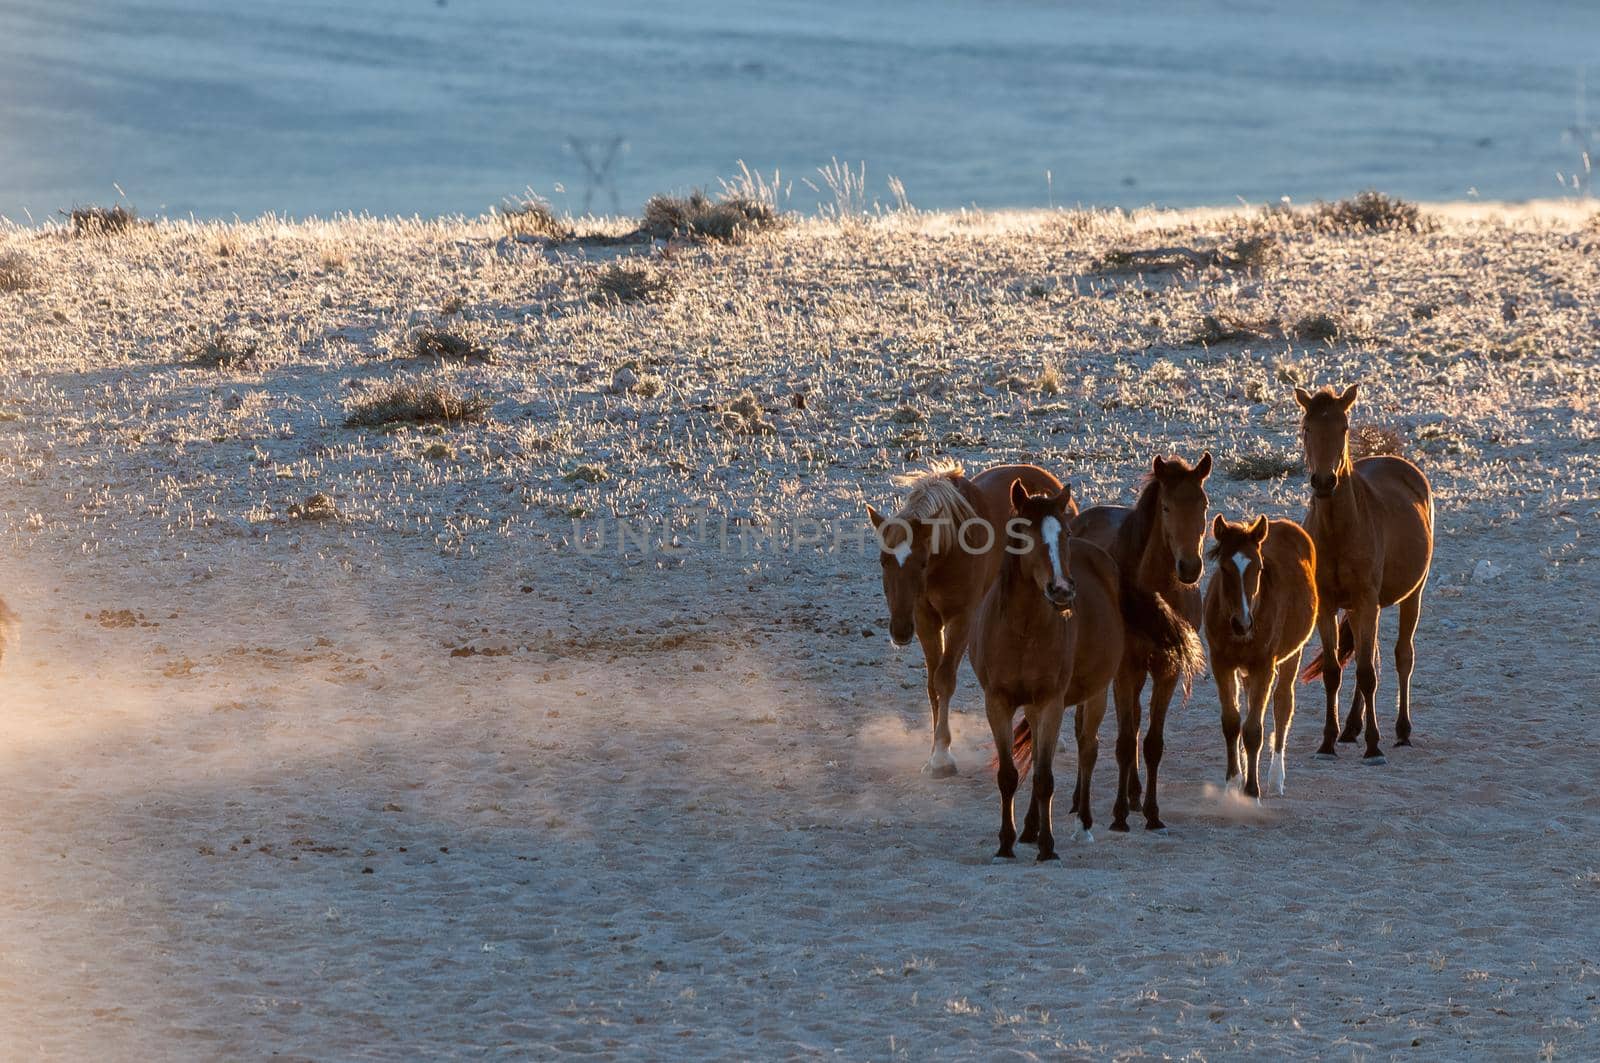 Wild horses of the Namib walking at sunrise by dpreezg